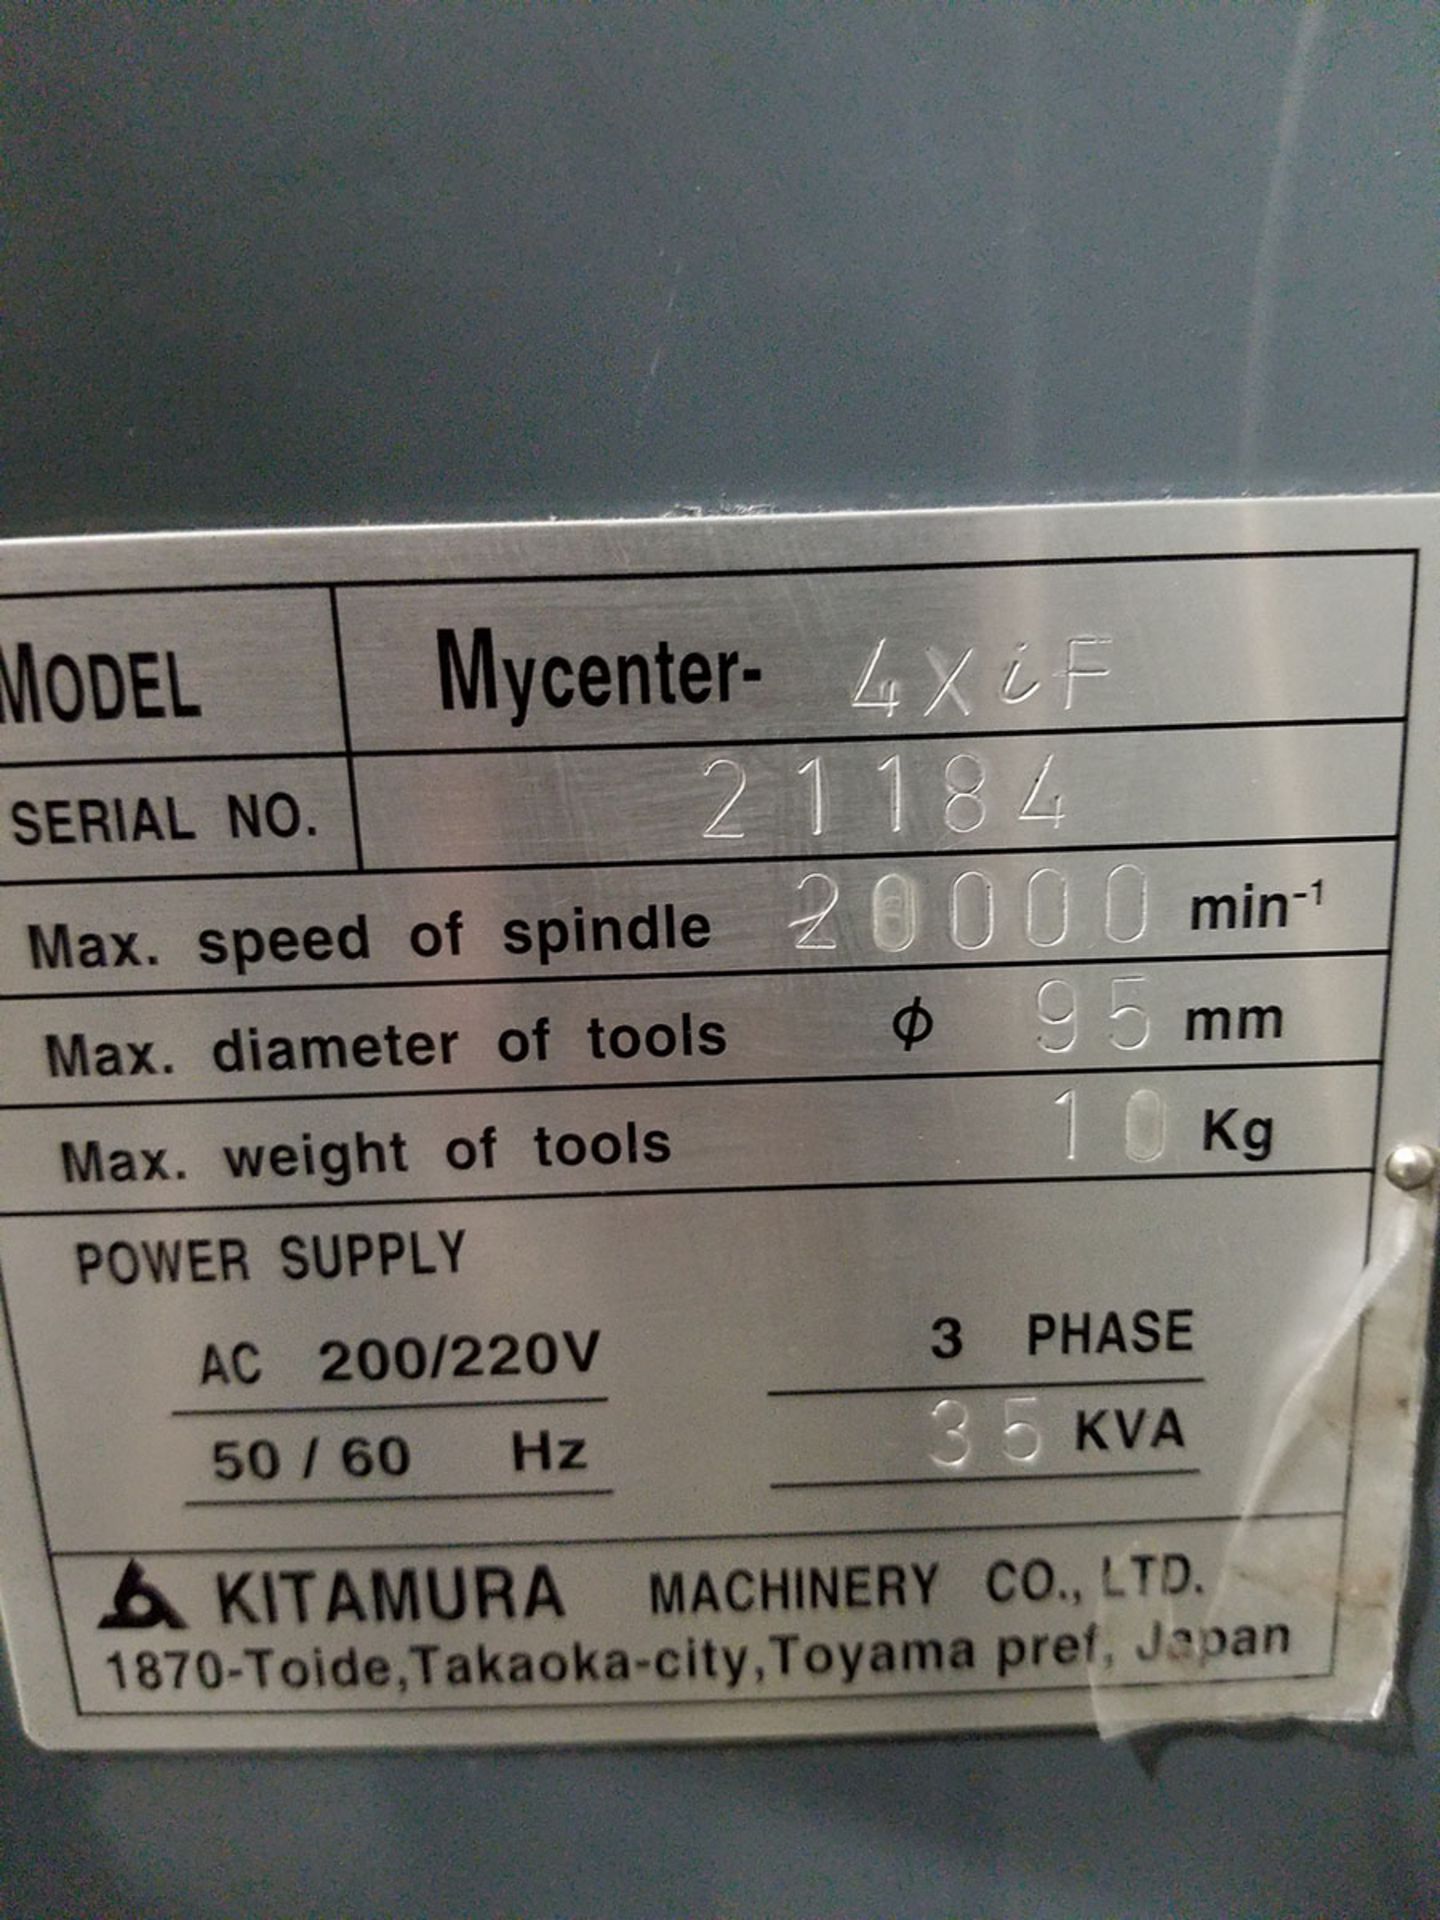 2006 KITAMURA CNC VERTICAL MACHINING CENTER, MODEL MYCENTER 4XIF, FANUC 16I-MB CNC CONTROL WITH HPCC - Image 19 of 20